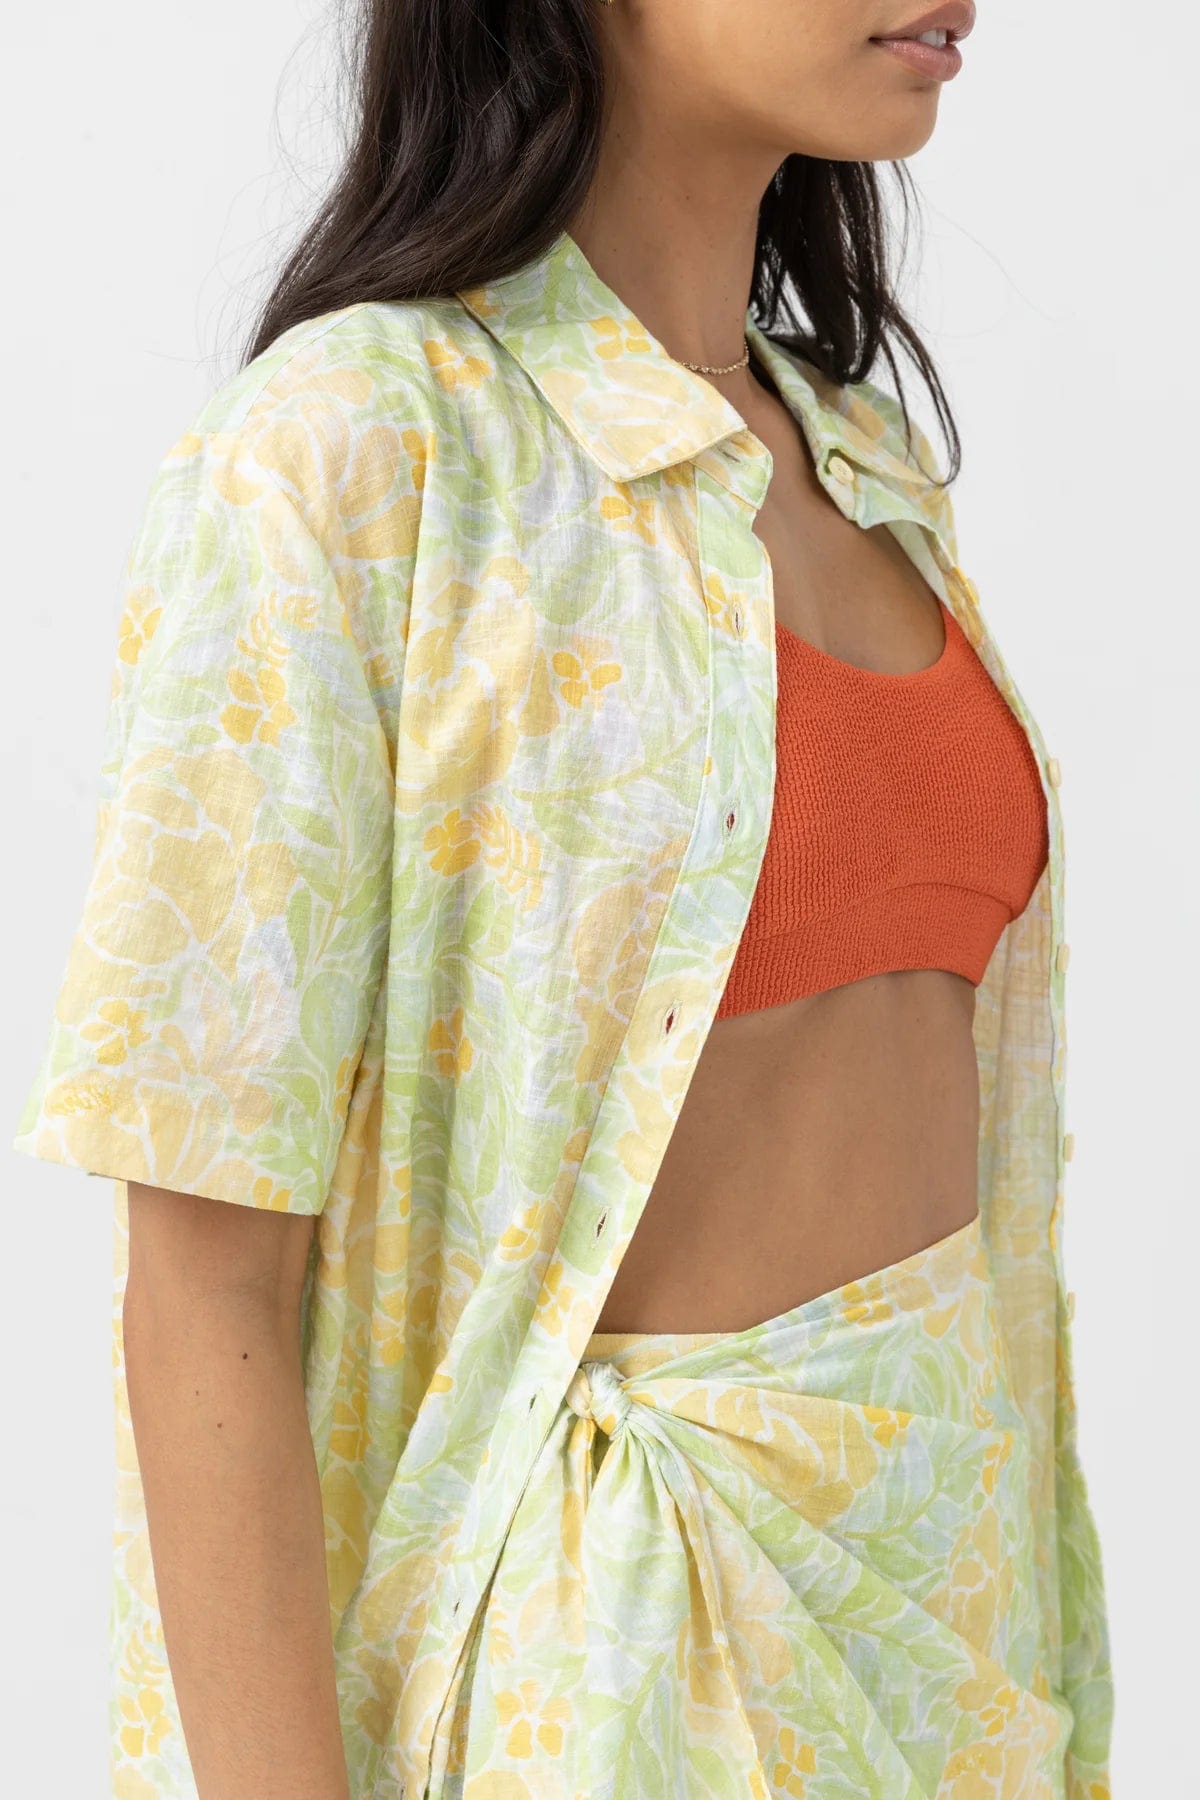 Magnolia Floral Short Sleeve Shirt - Fern - Rhythm - Splash Swimwear  - Jul23, rhythm, rhythm women, shirt, womens clothing - Splash Swimwear 